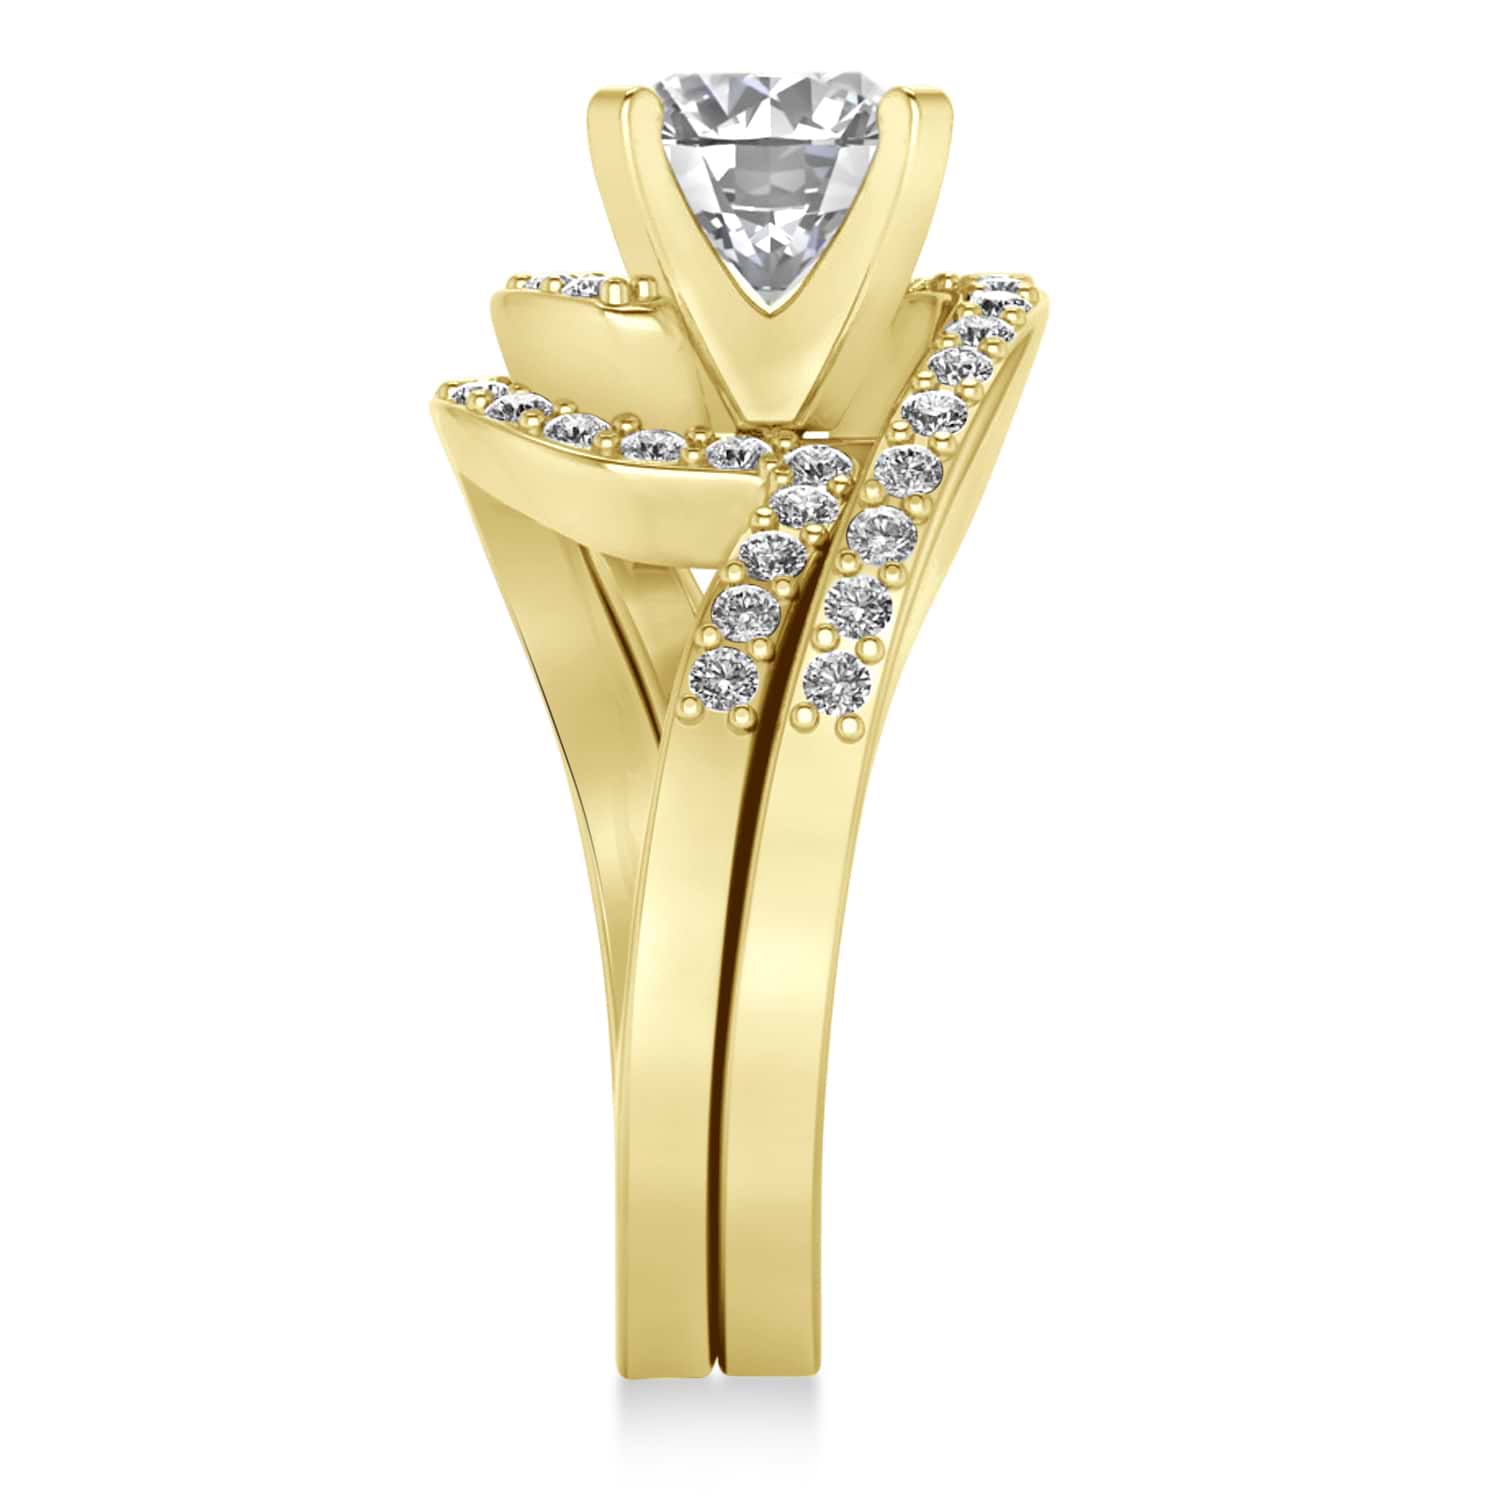 Lab Grown Diamond Accented Tension Set Bridal Set 18k Yellow Gold (0.35ct)